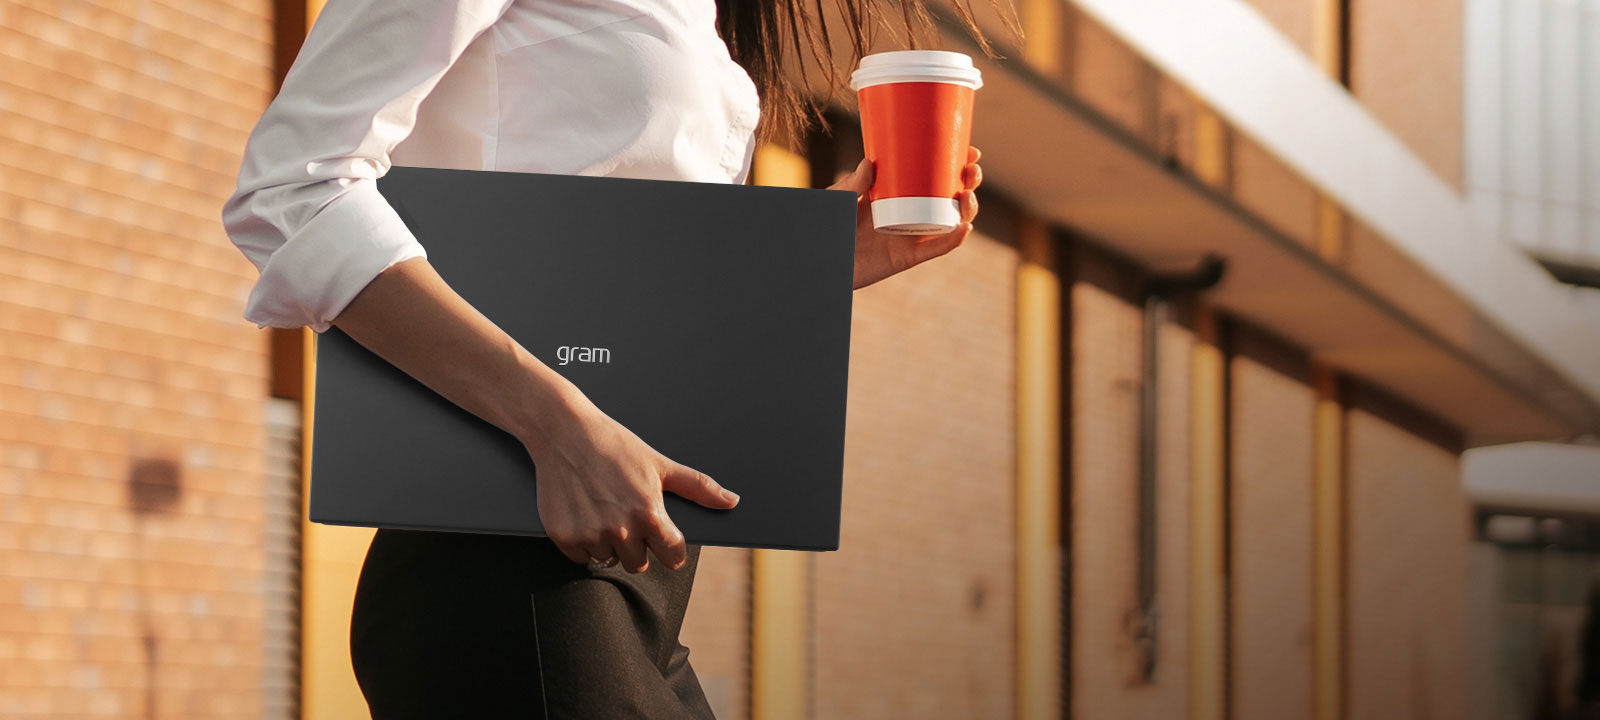 LG gram-light-slim-portability.